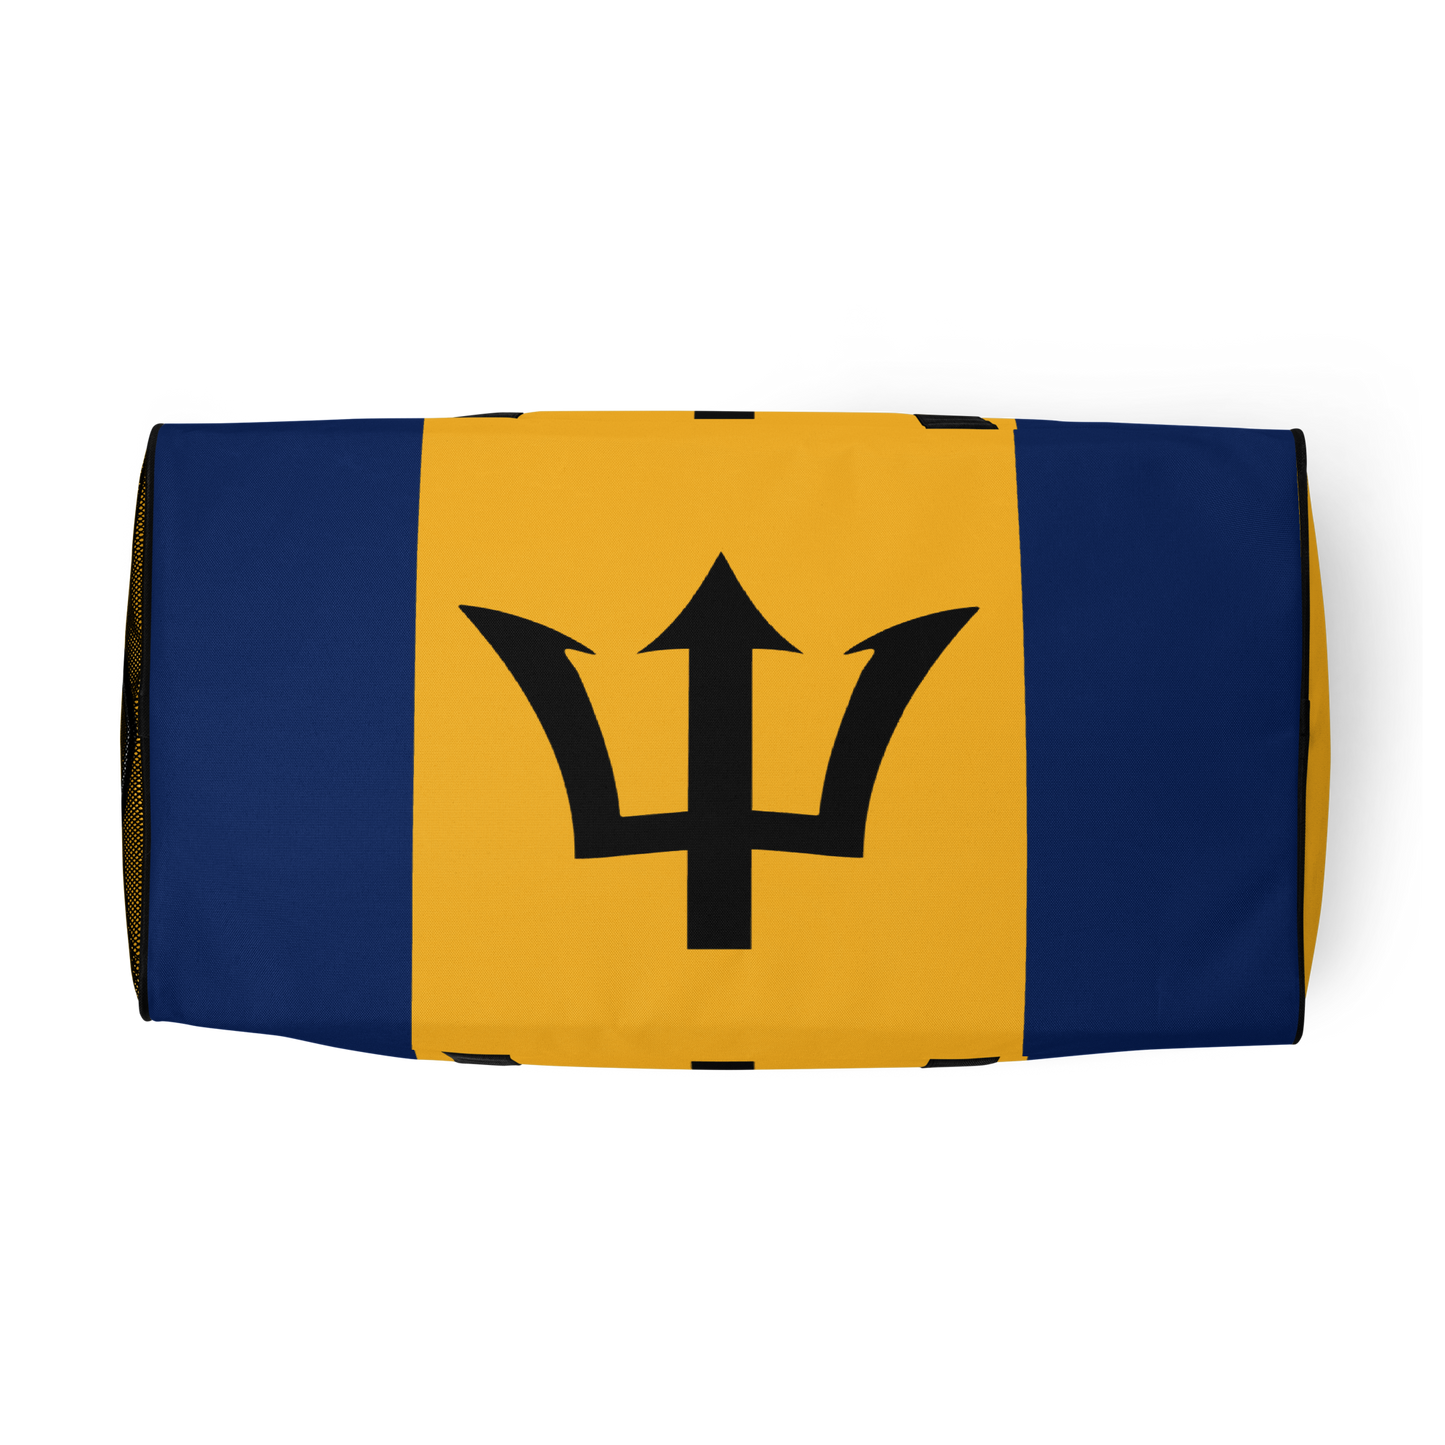 Barbados Duffle bag